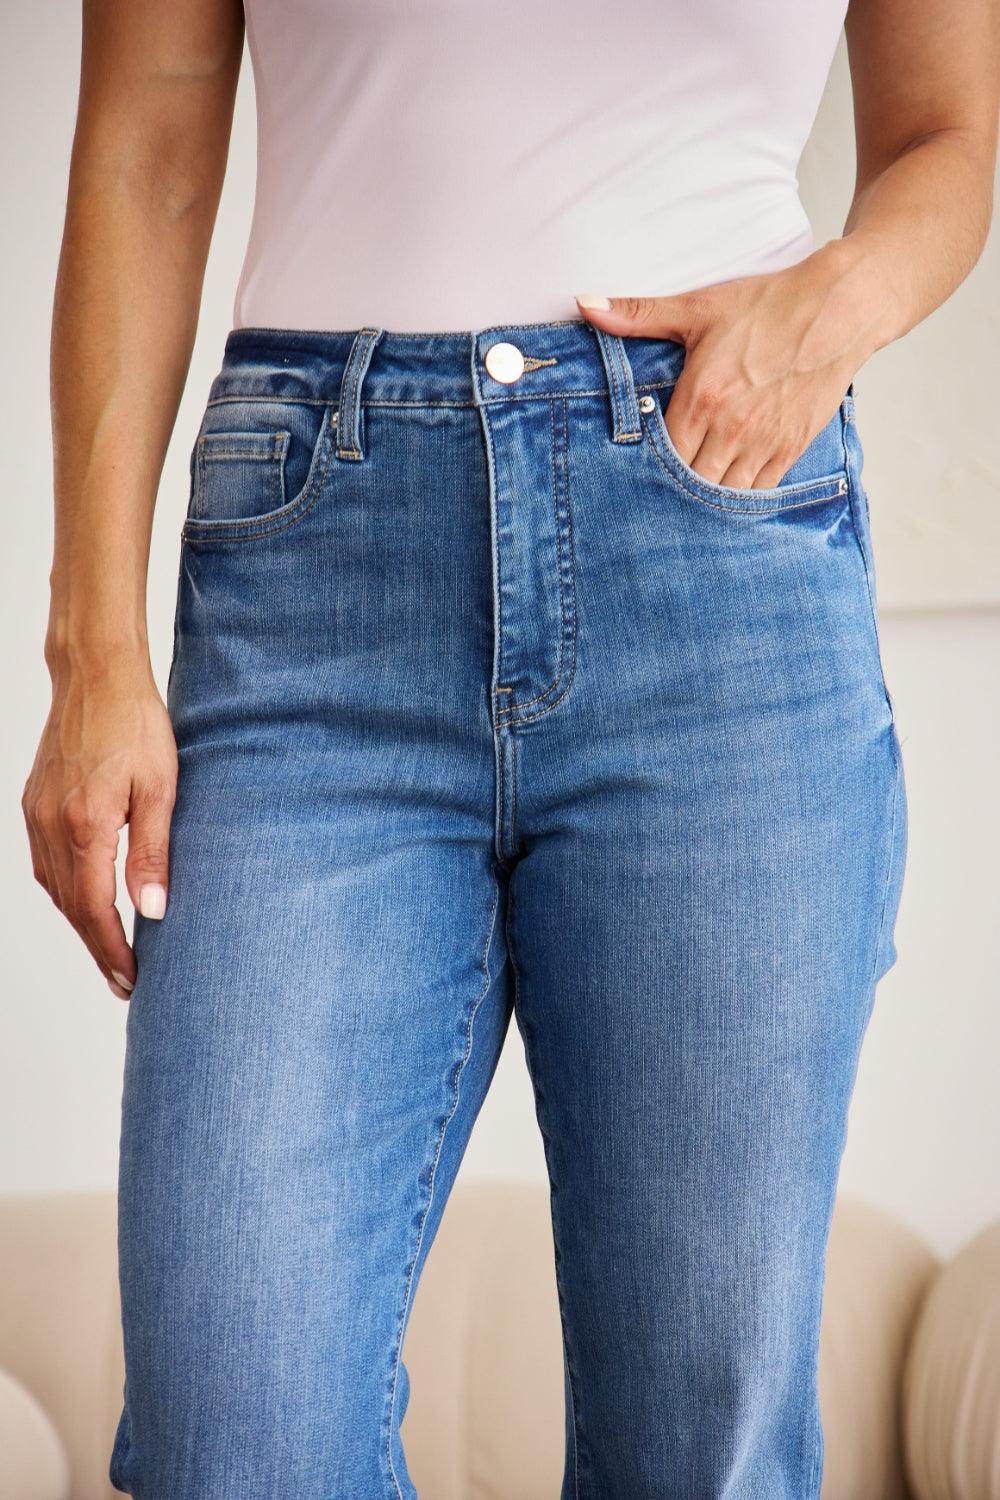 RFM Mini Mia Tummy Control High Waist Jeans